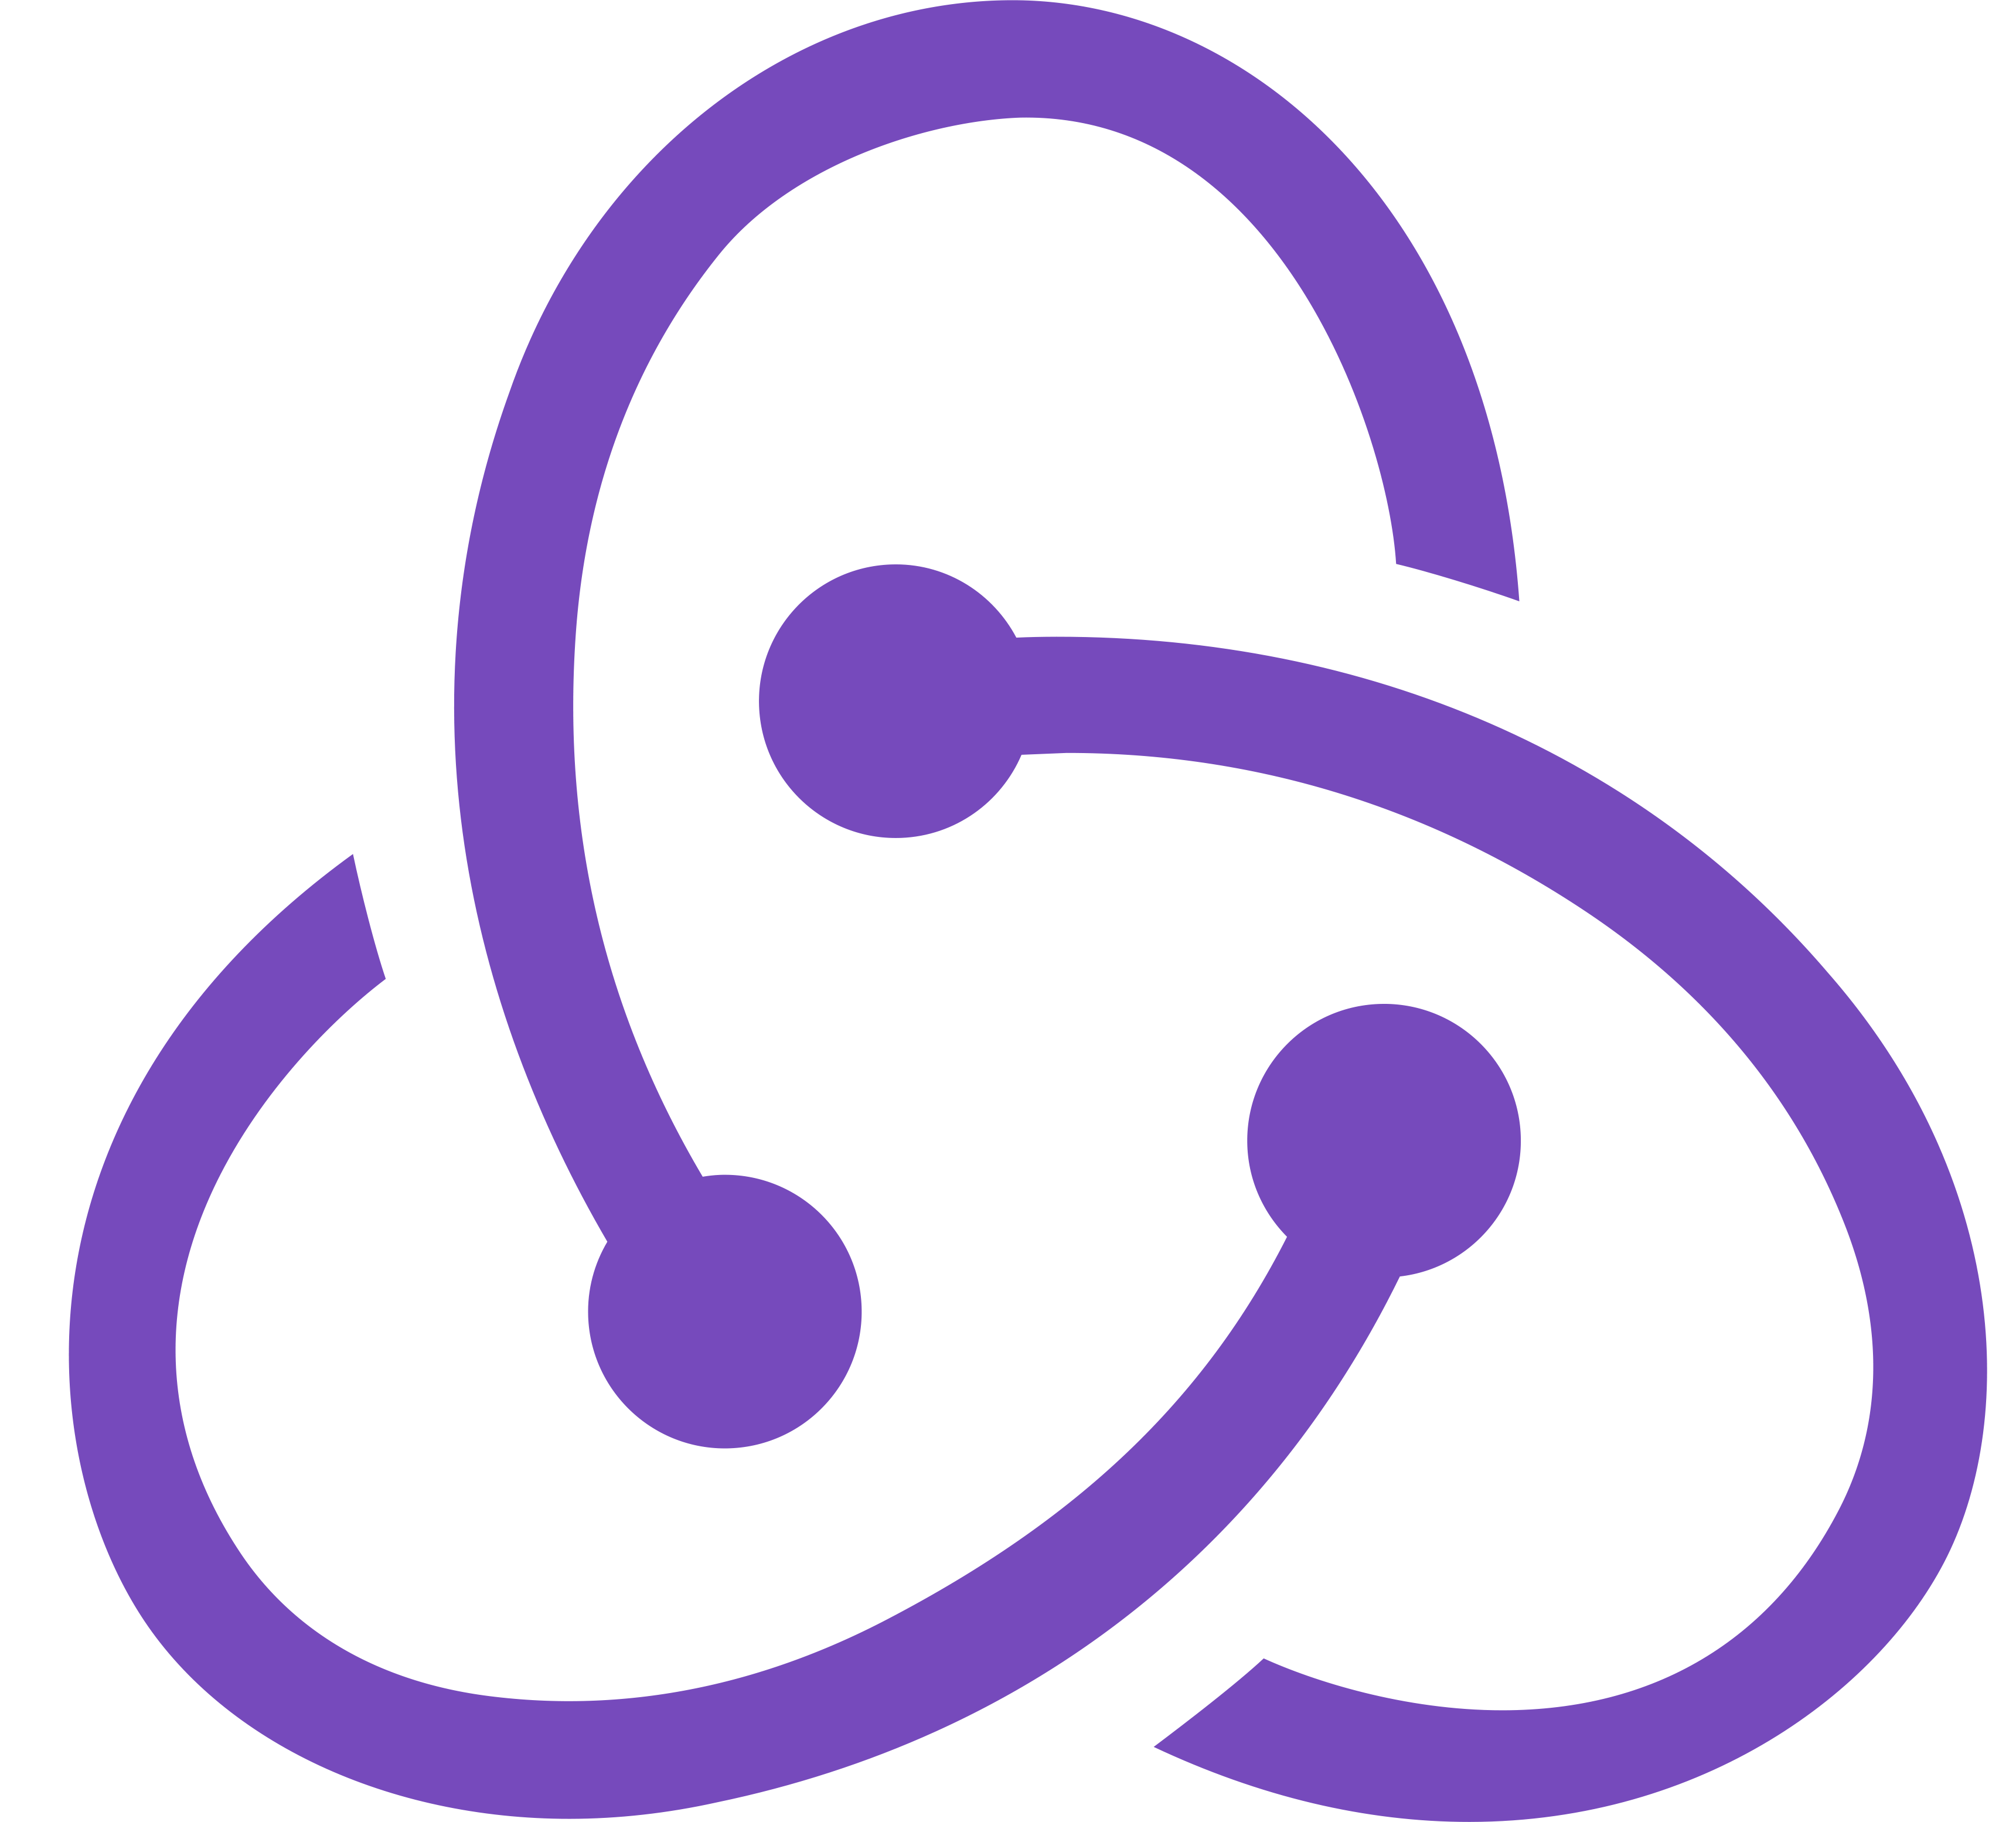 redux/logo at master Â· reactjs/redux Â· GitHub